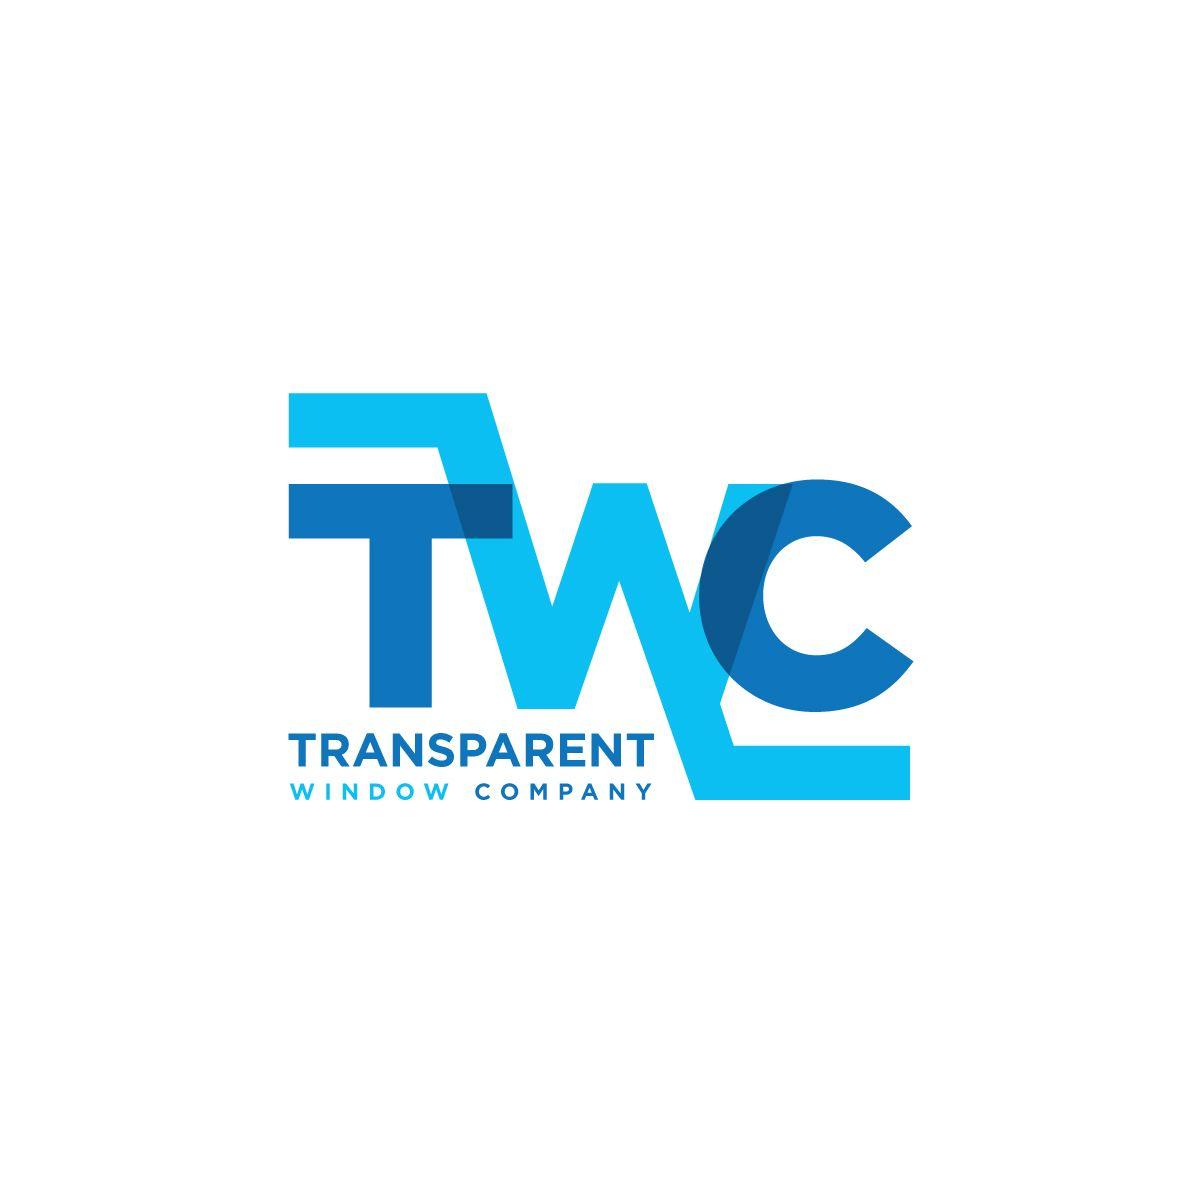 TWC Logo - Economical, Bold Logo Design for Transparent Window Company or TWC ...